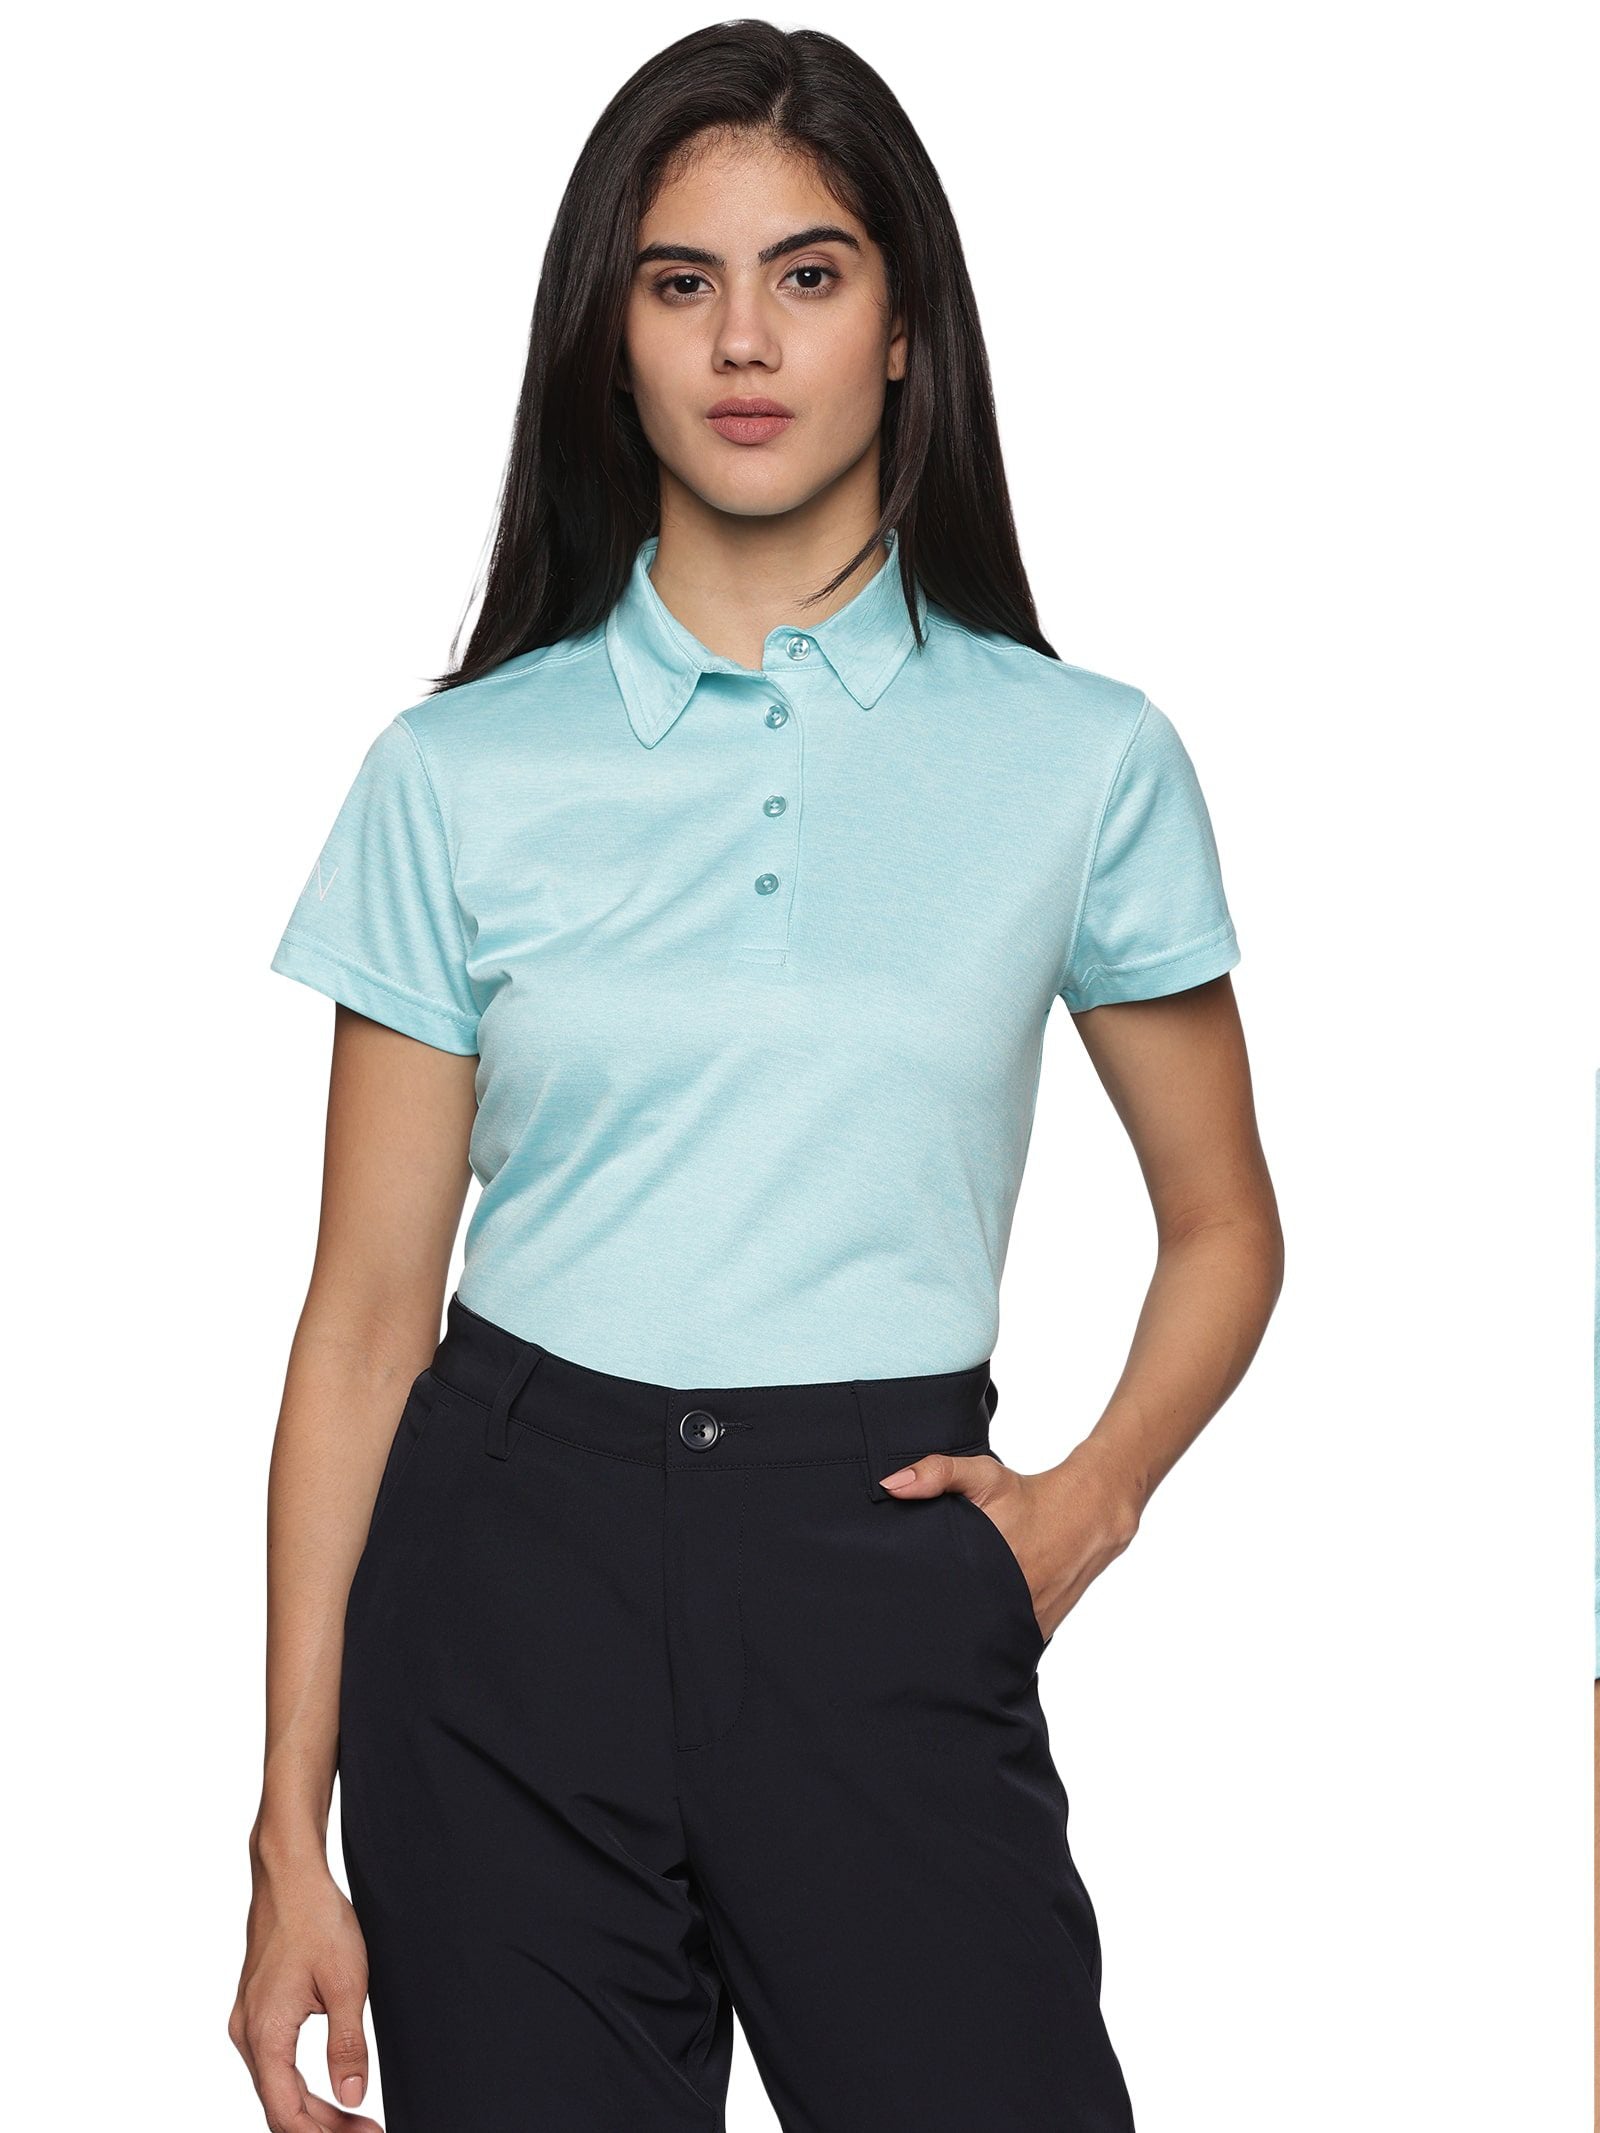 Styzen Women Golf Polo T-shirt